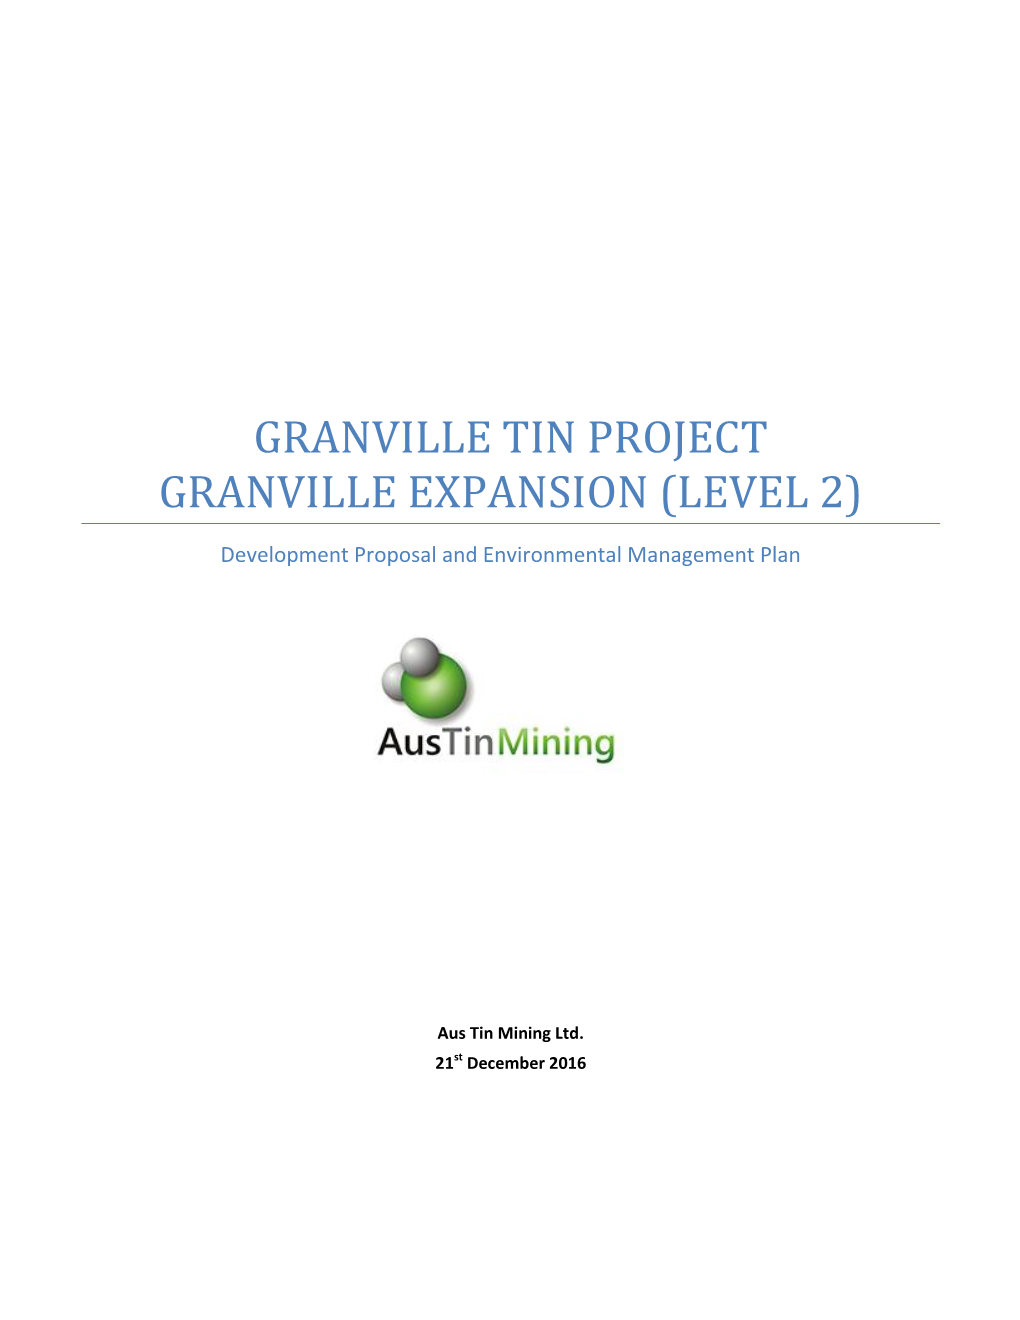 GRANVILLE TIN PROJECT GRANVILLE EXPANSION (LEVEL 2) Development Proposal and Environmental Management Plan